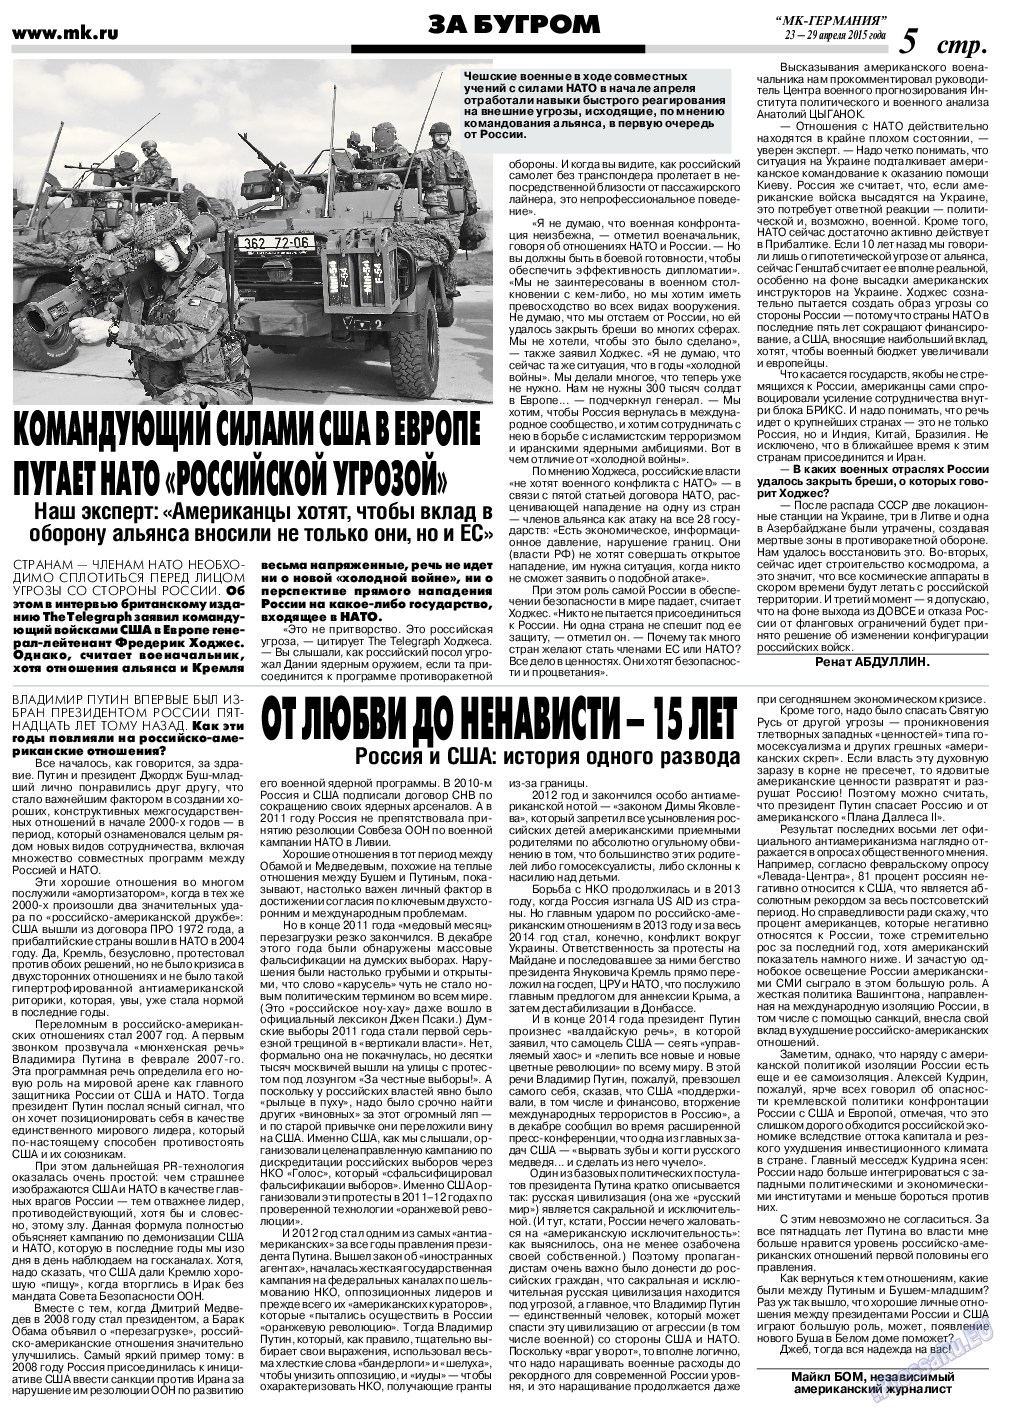 МК-Германия, газета. 2015 №17 стр.5